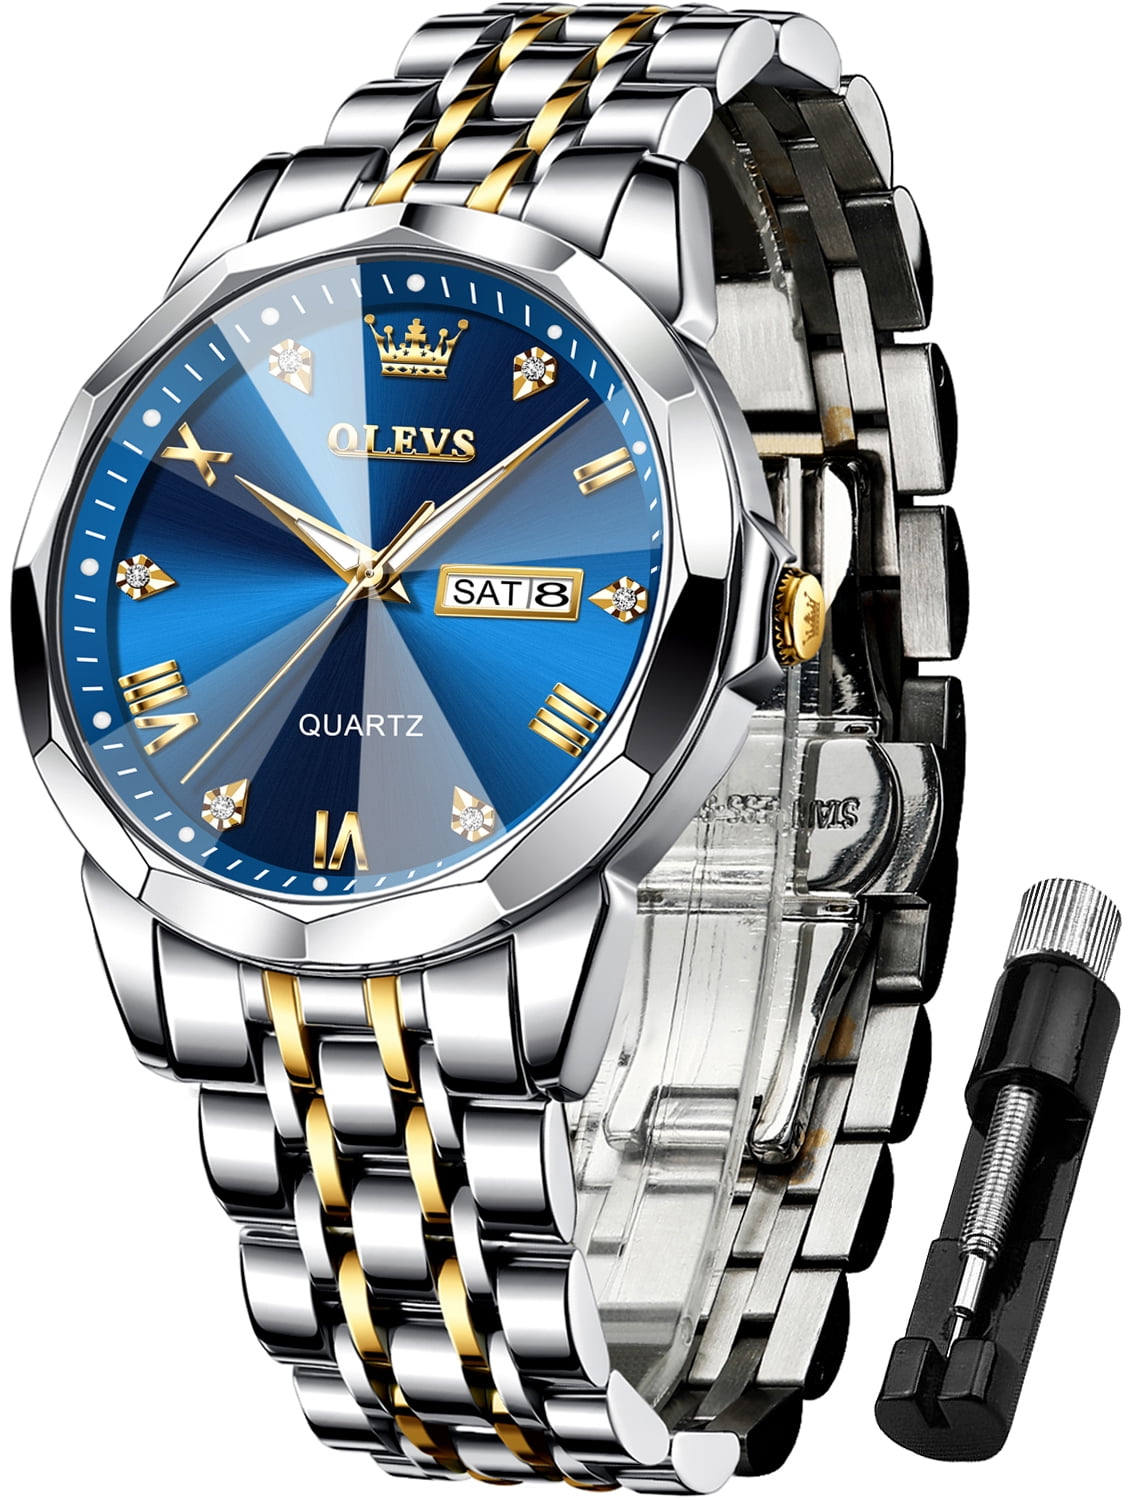 Timex Men's Solar Premium Dress 44mm Watch – Two-Tone Case Blue